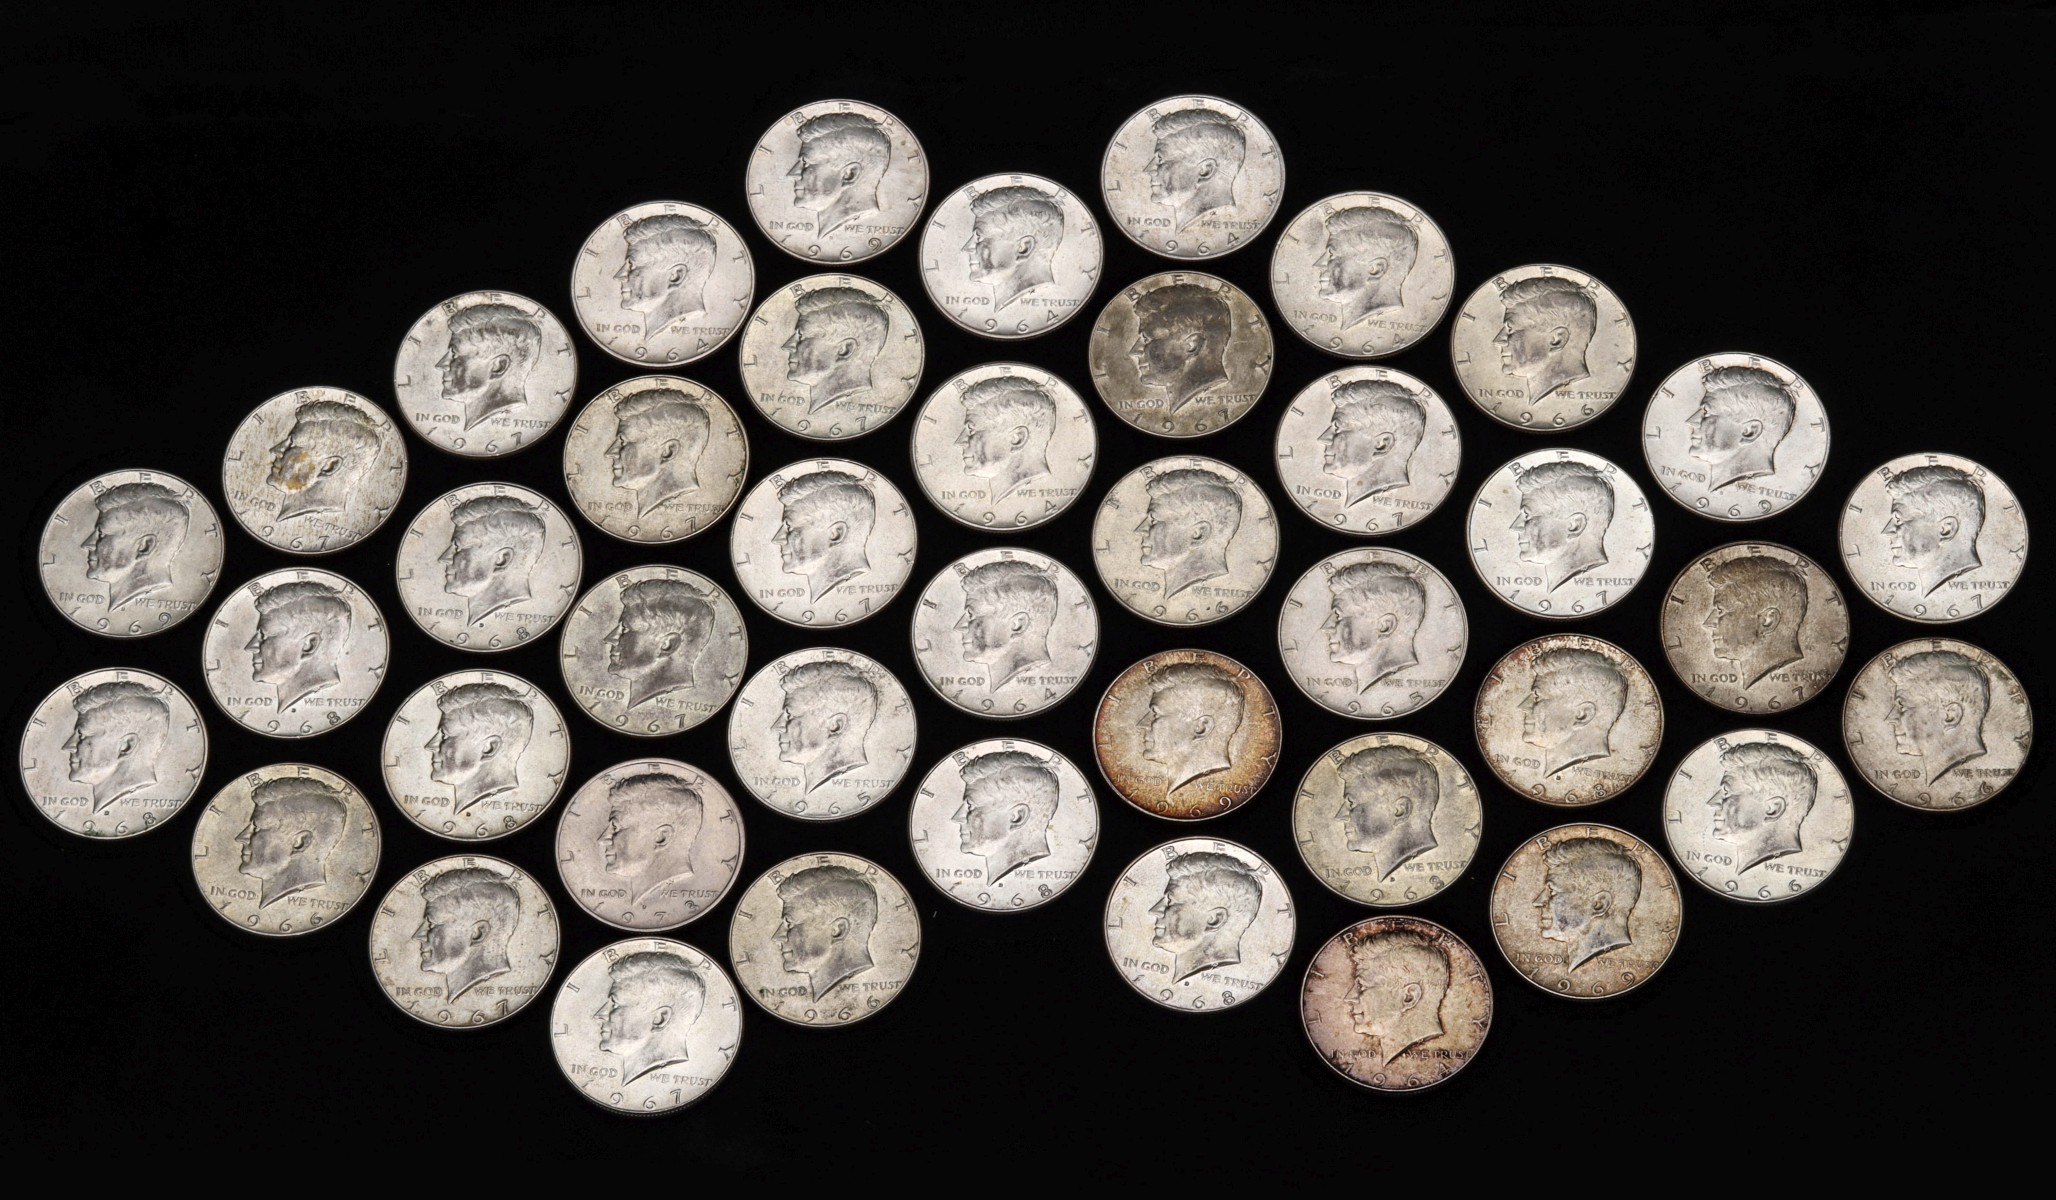 KENNEDY HALF DOLLARS, 1964-73, $21 FACE VALUE